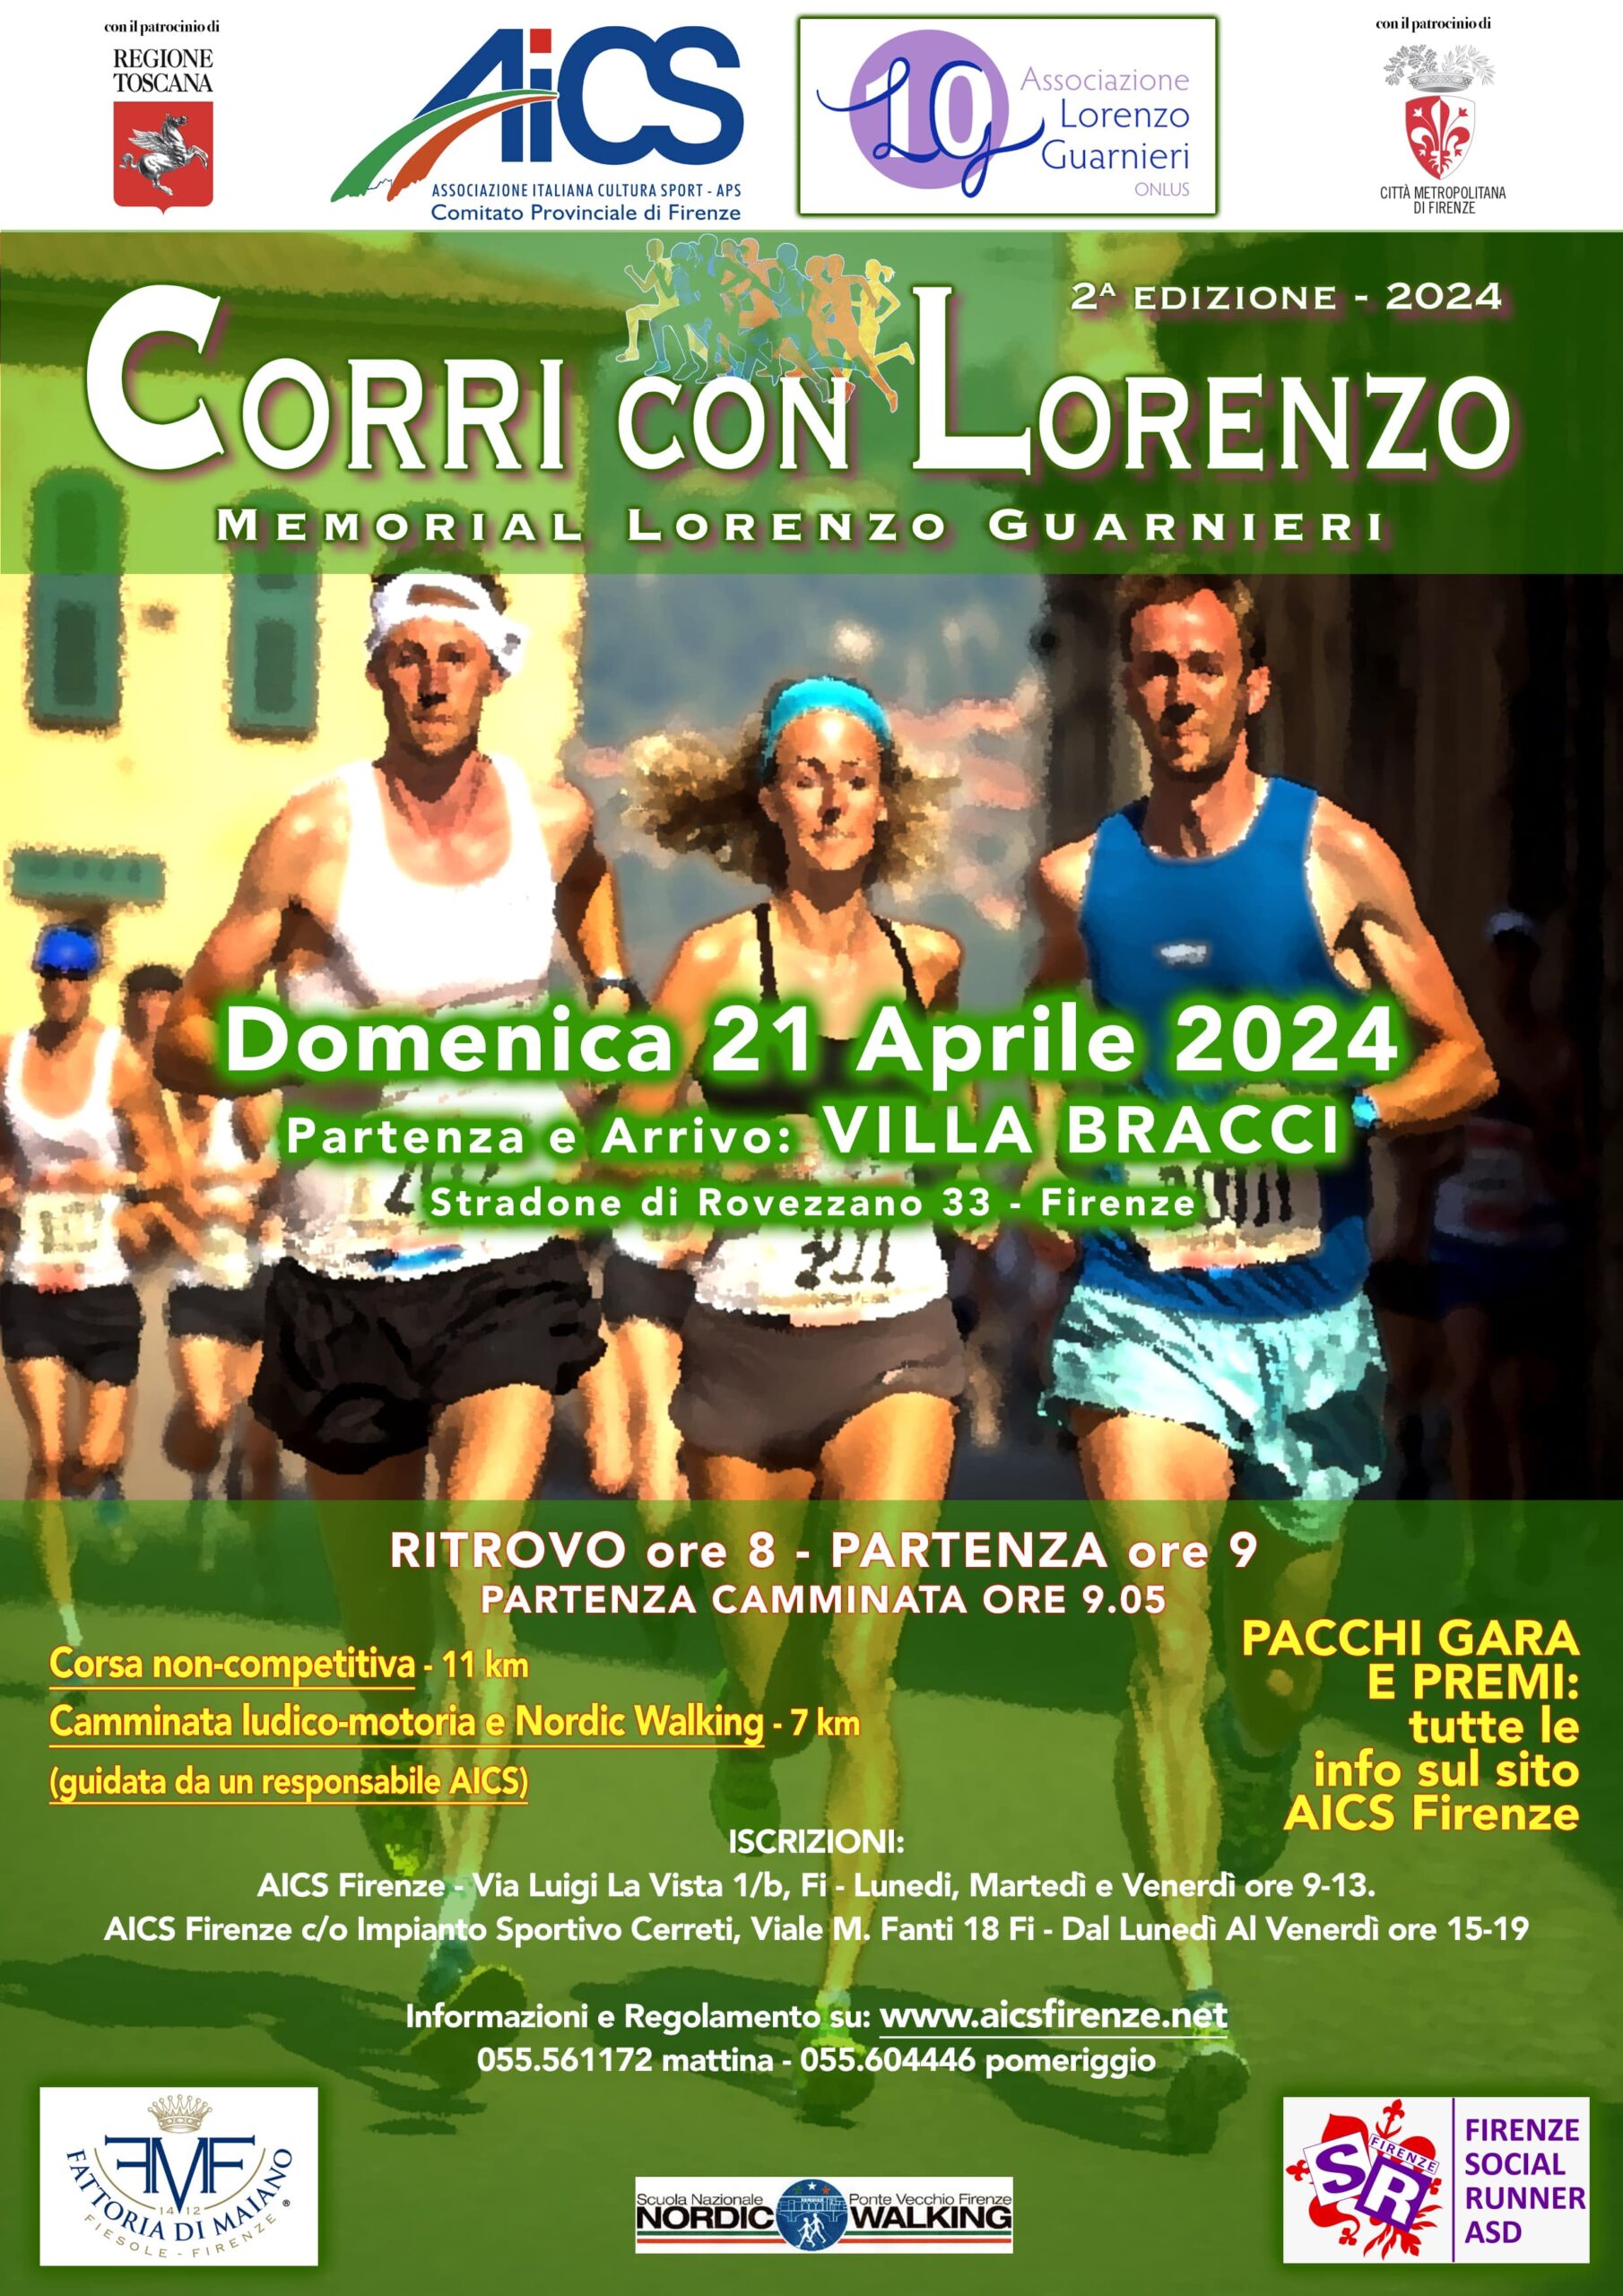 Corri con Lorenzo – Memorial Lorenzo Guarnieri 2024